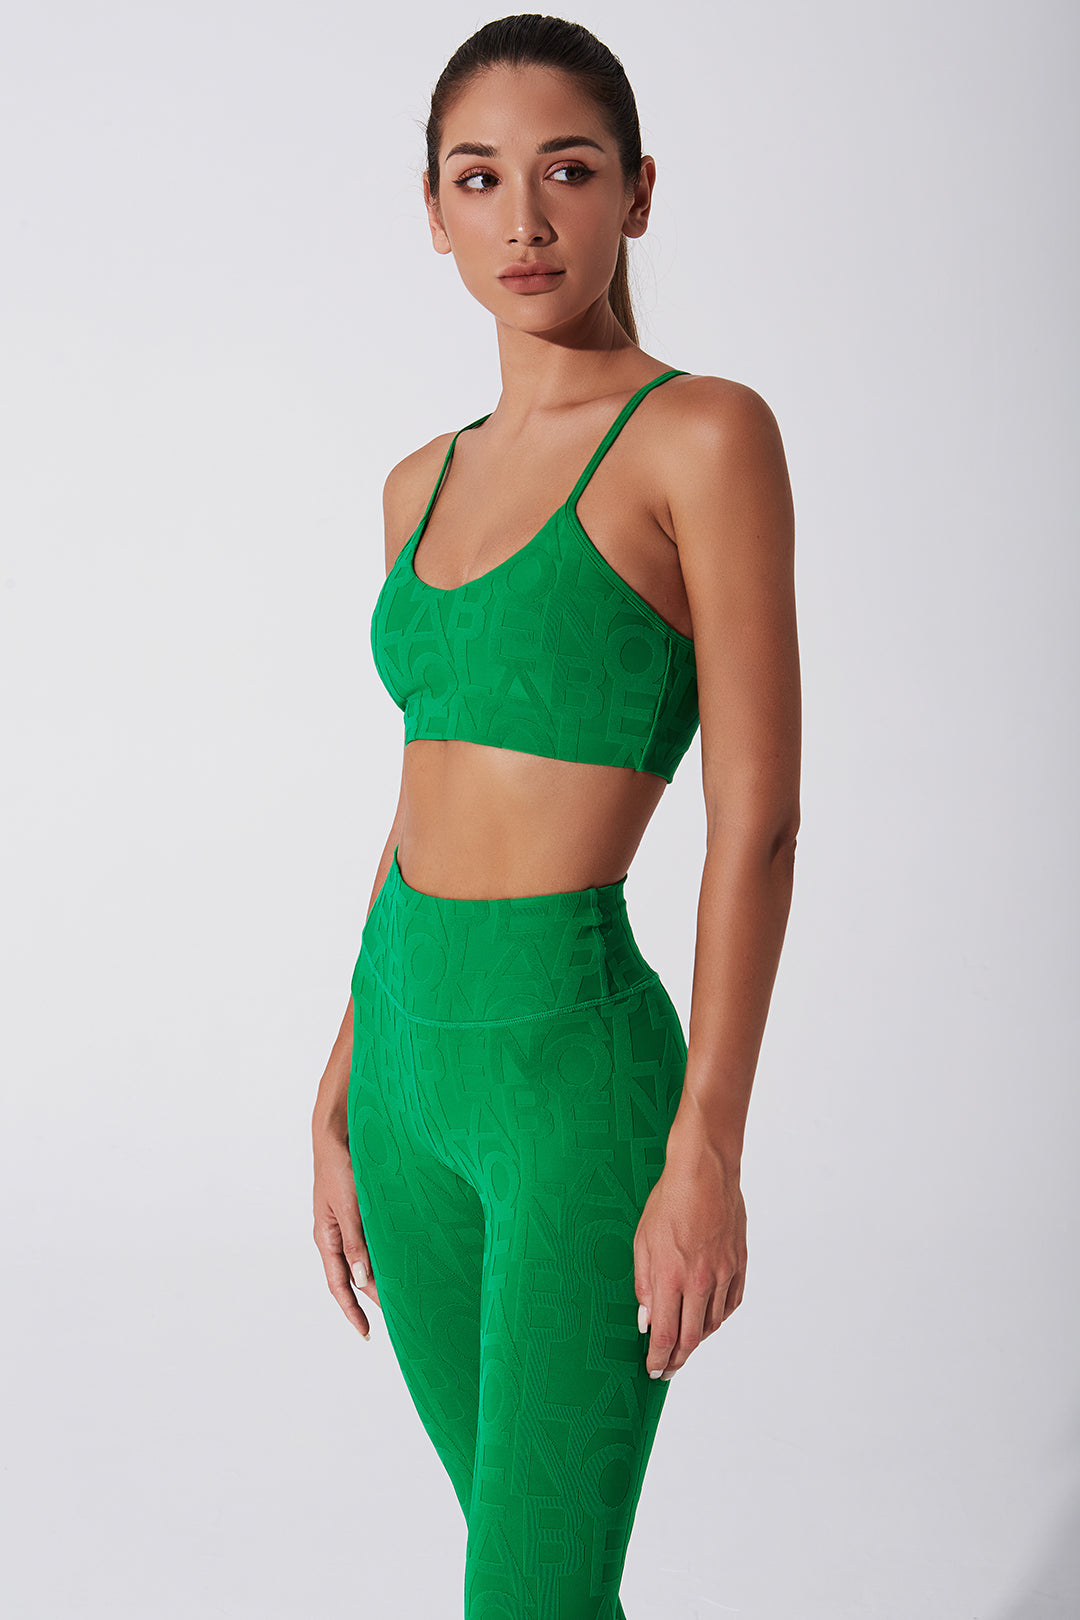 Women's dark green Lumiere Bra 3D, a stylish and comfortable undergarment.